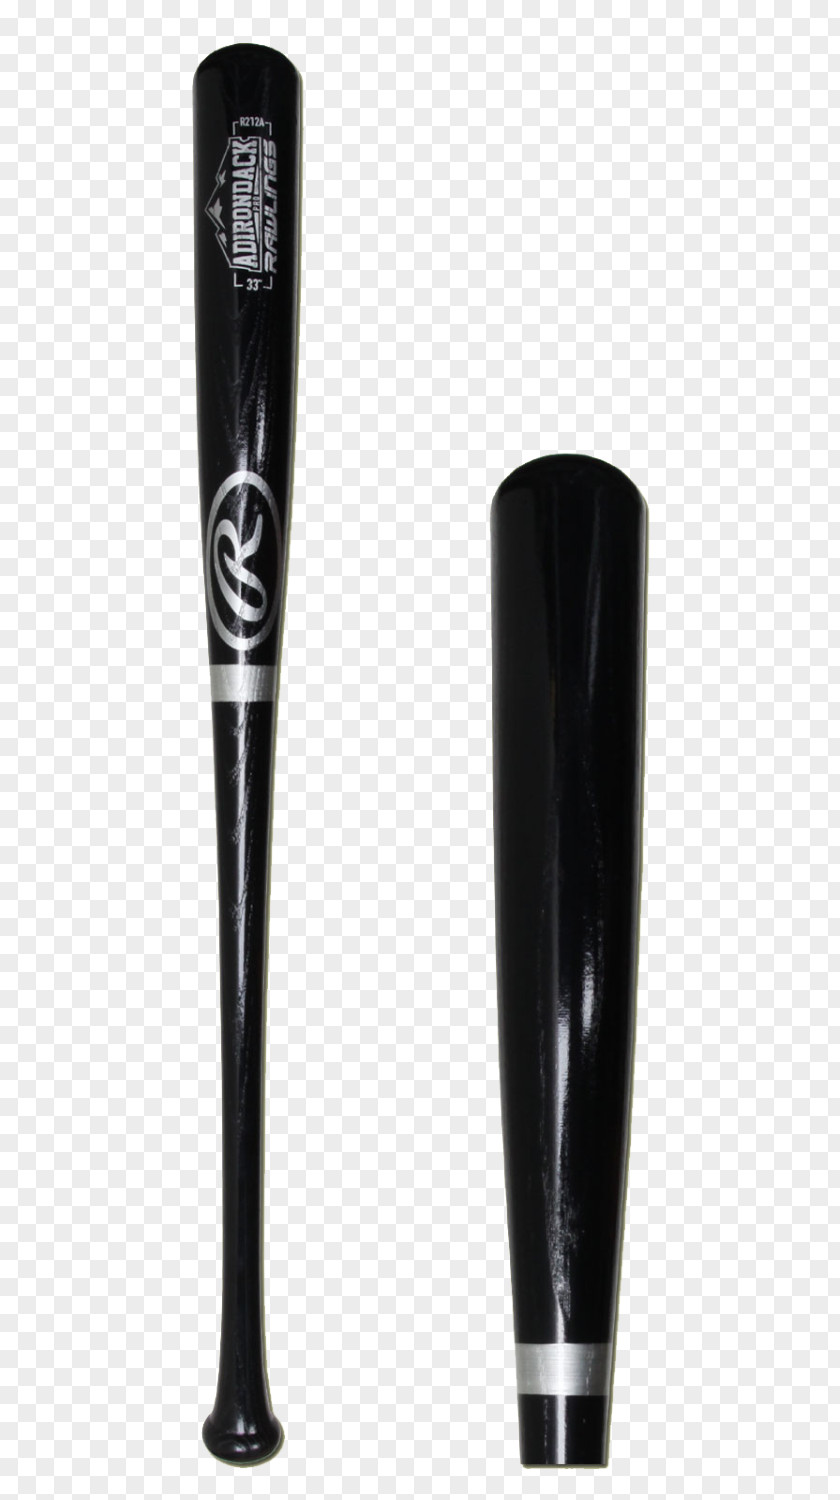 Rawlings Softball Bat Drawing Baseball Bats Composite Marucci Pro Cut Adult PNG